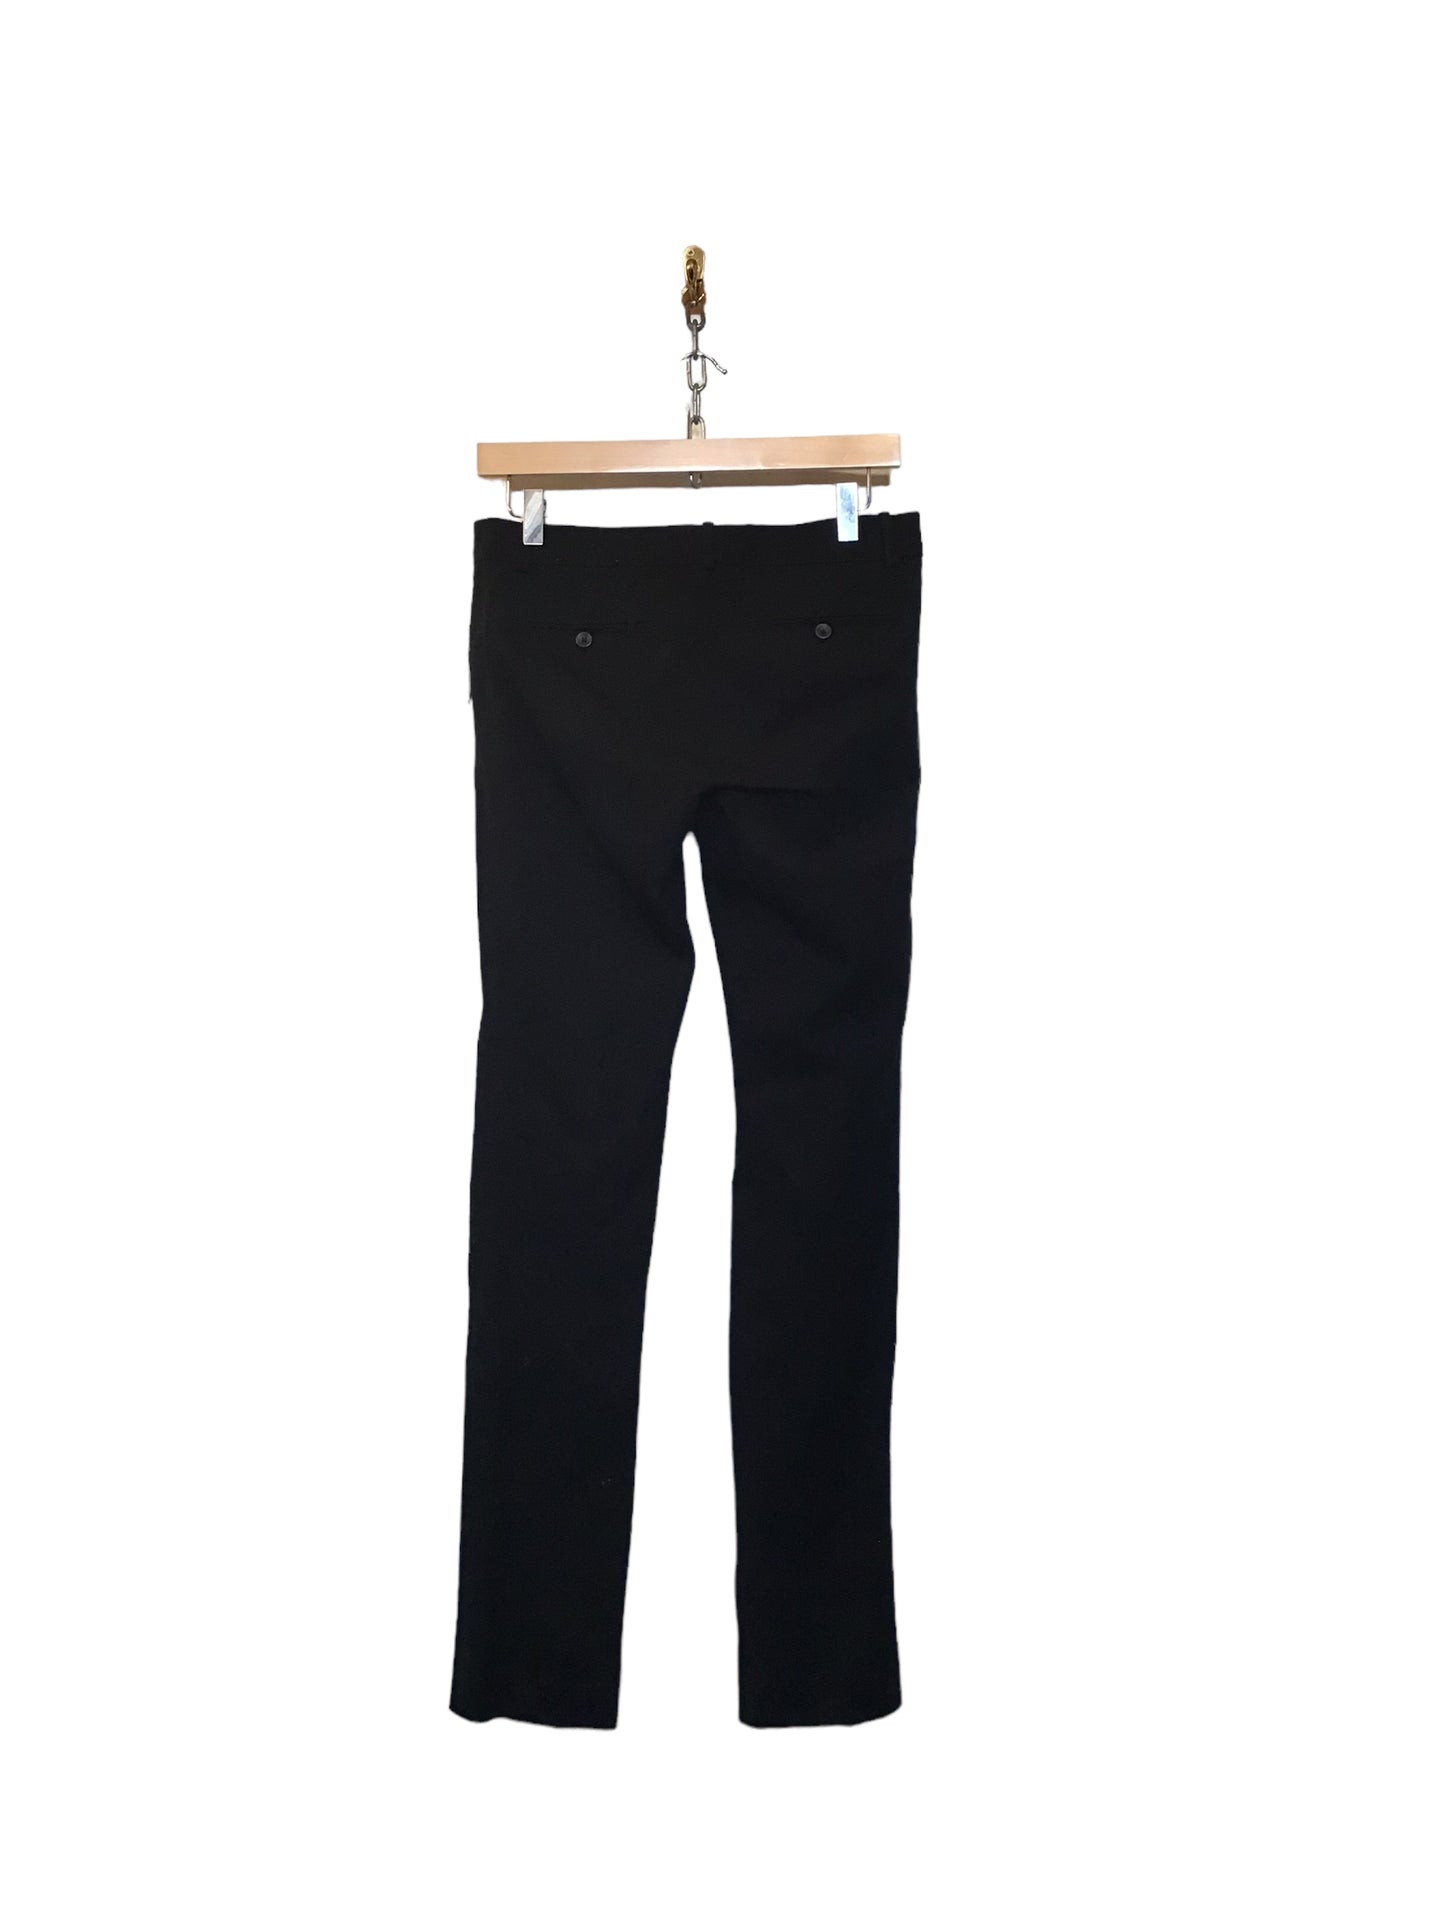 Gap Trousers (Size M)